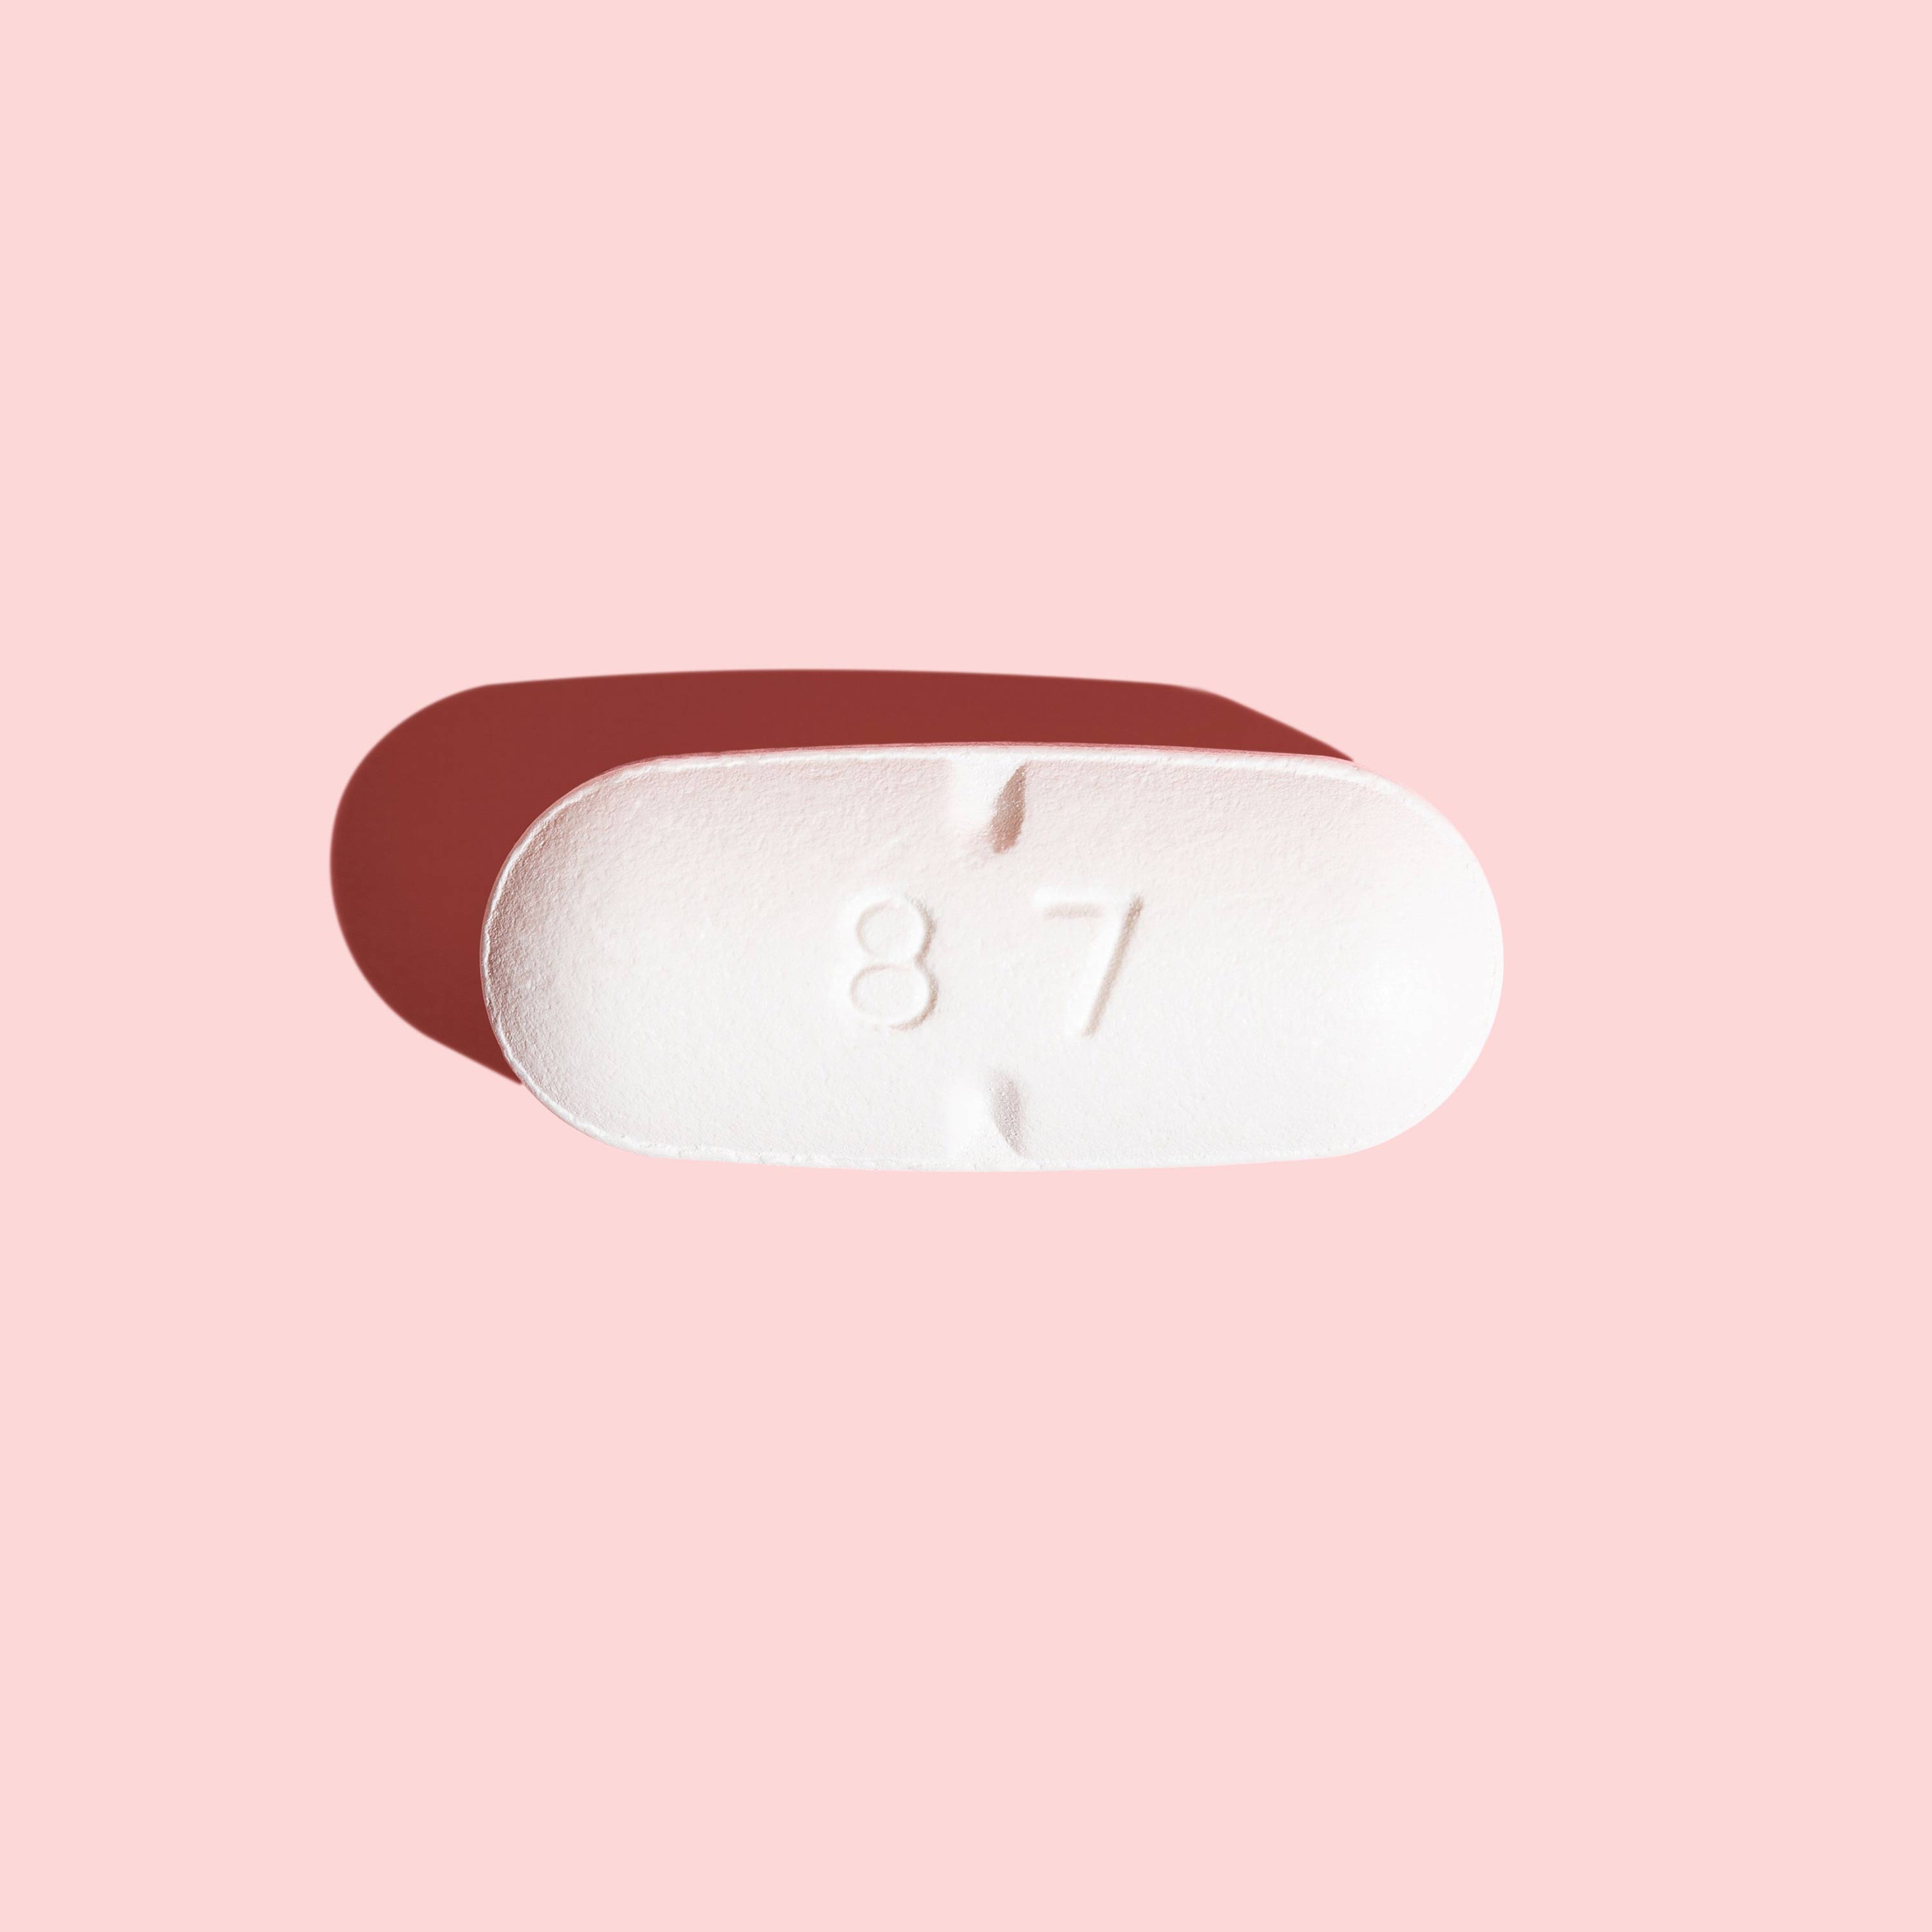 Valacyclovir tablet on a pink background